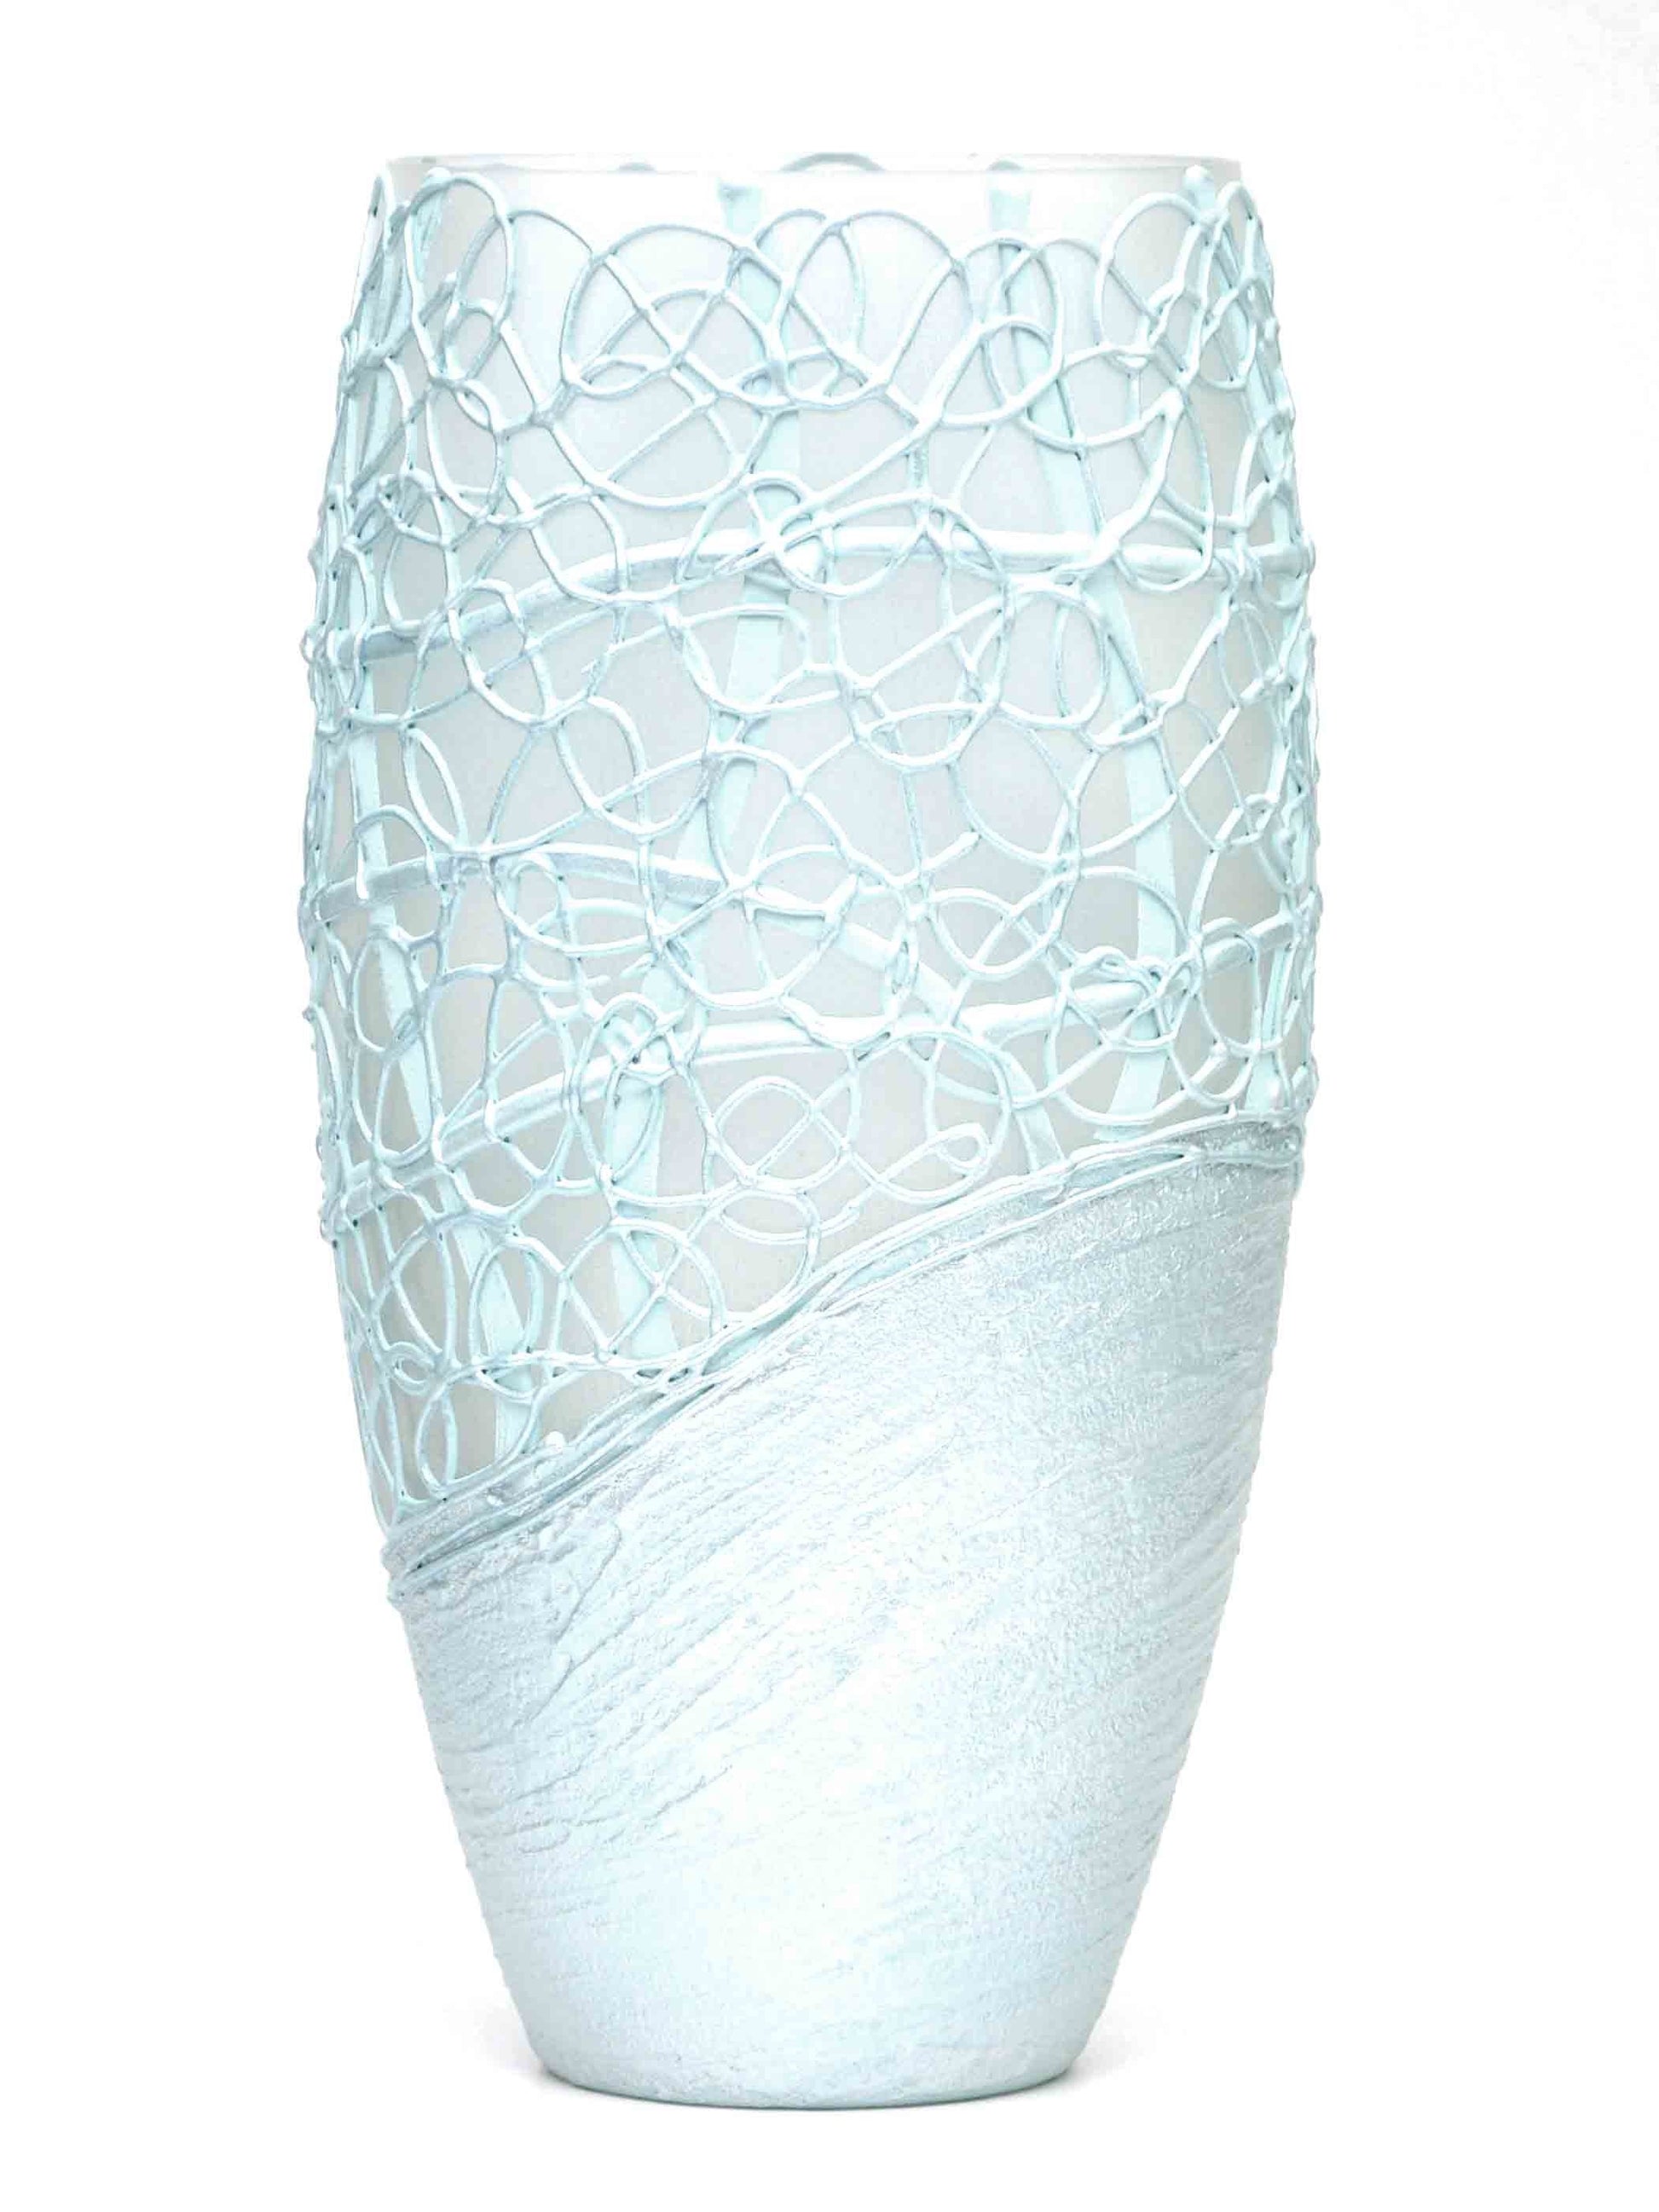 Handpainted Glass Vase for Flowers | Painted Art Glass Oval Vase | Interior Design Home Room Decor | Table vase 12 inch-2